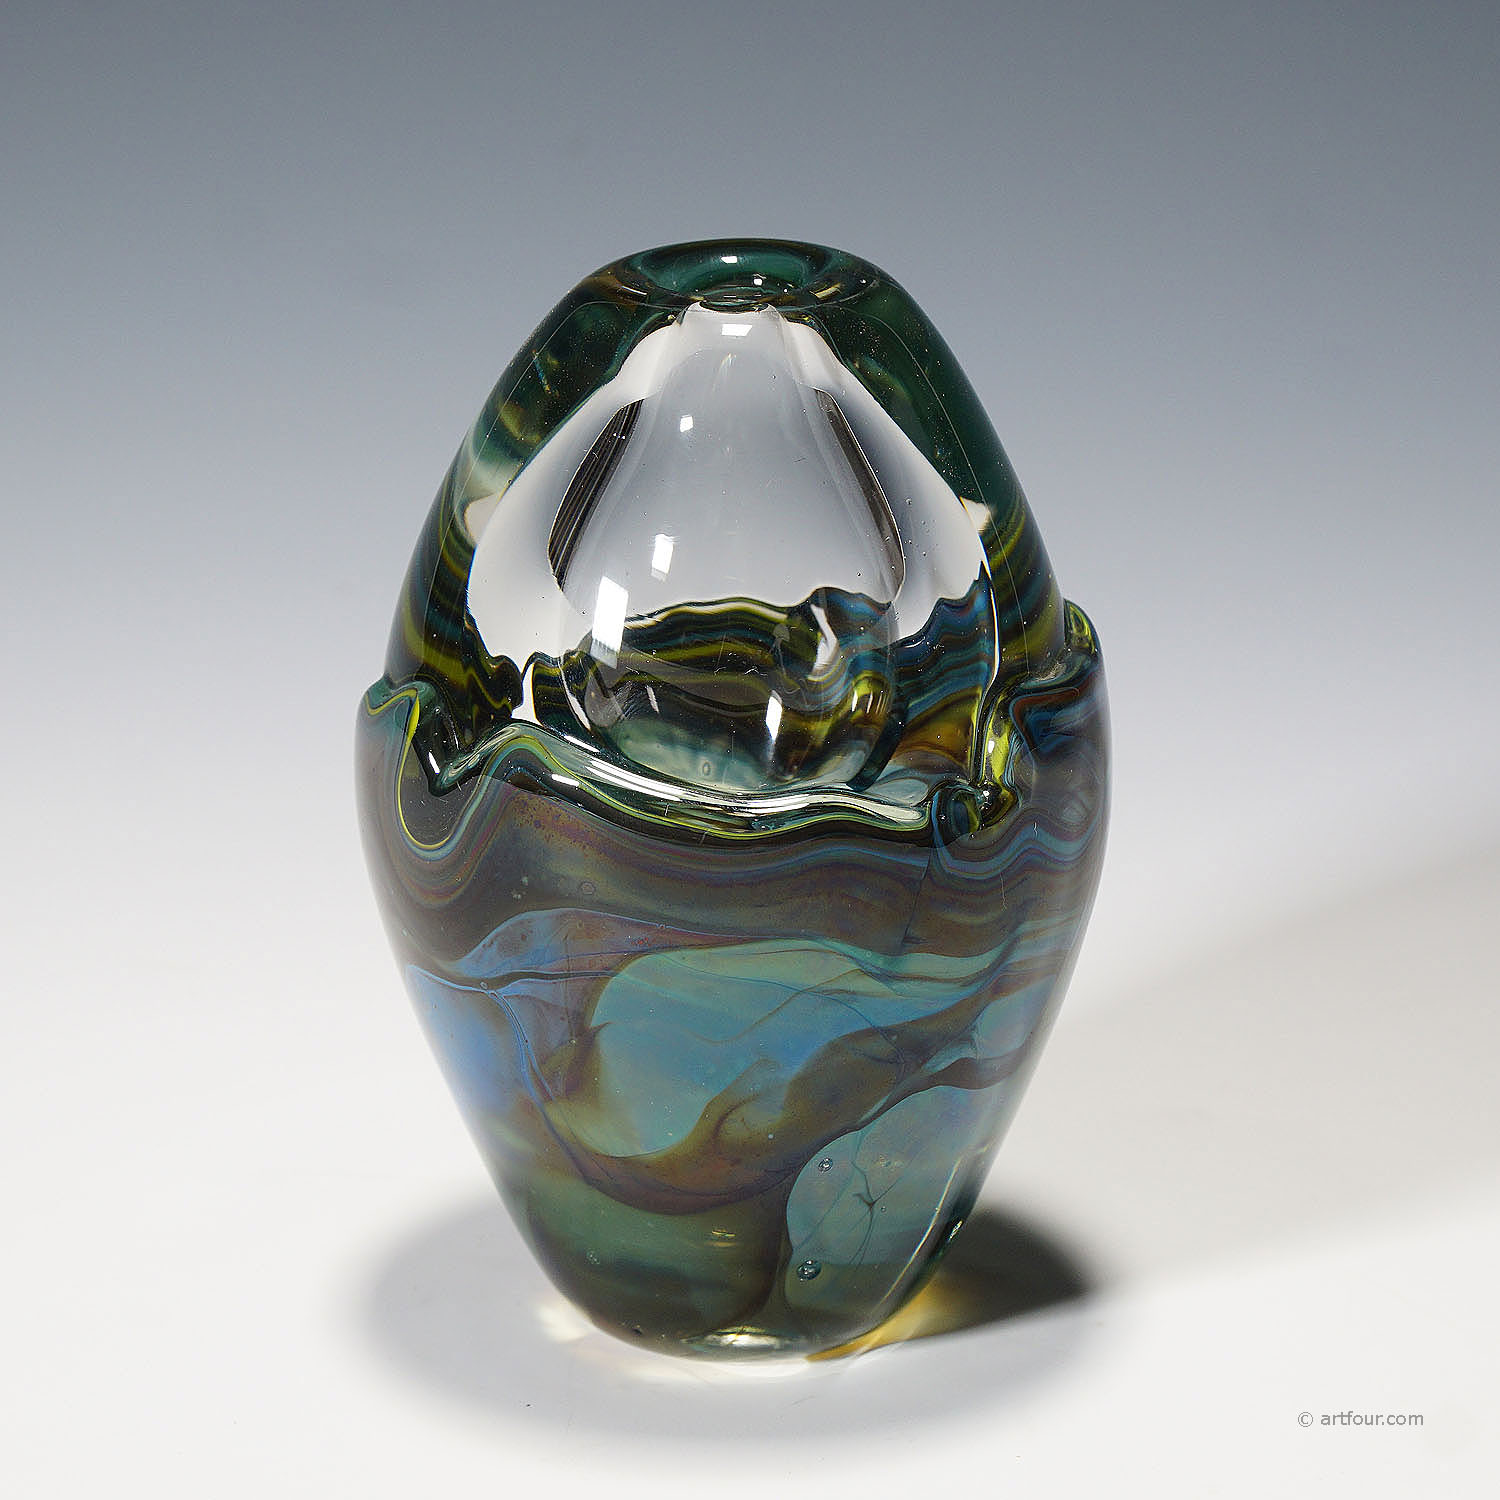 Vintage Studio Glass Designed by German Artist Udo Edelmann 1988